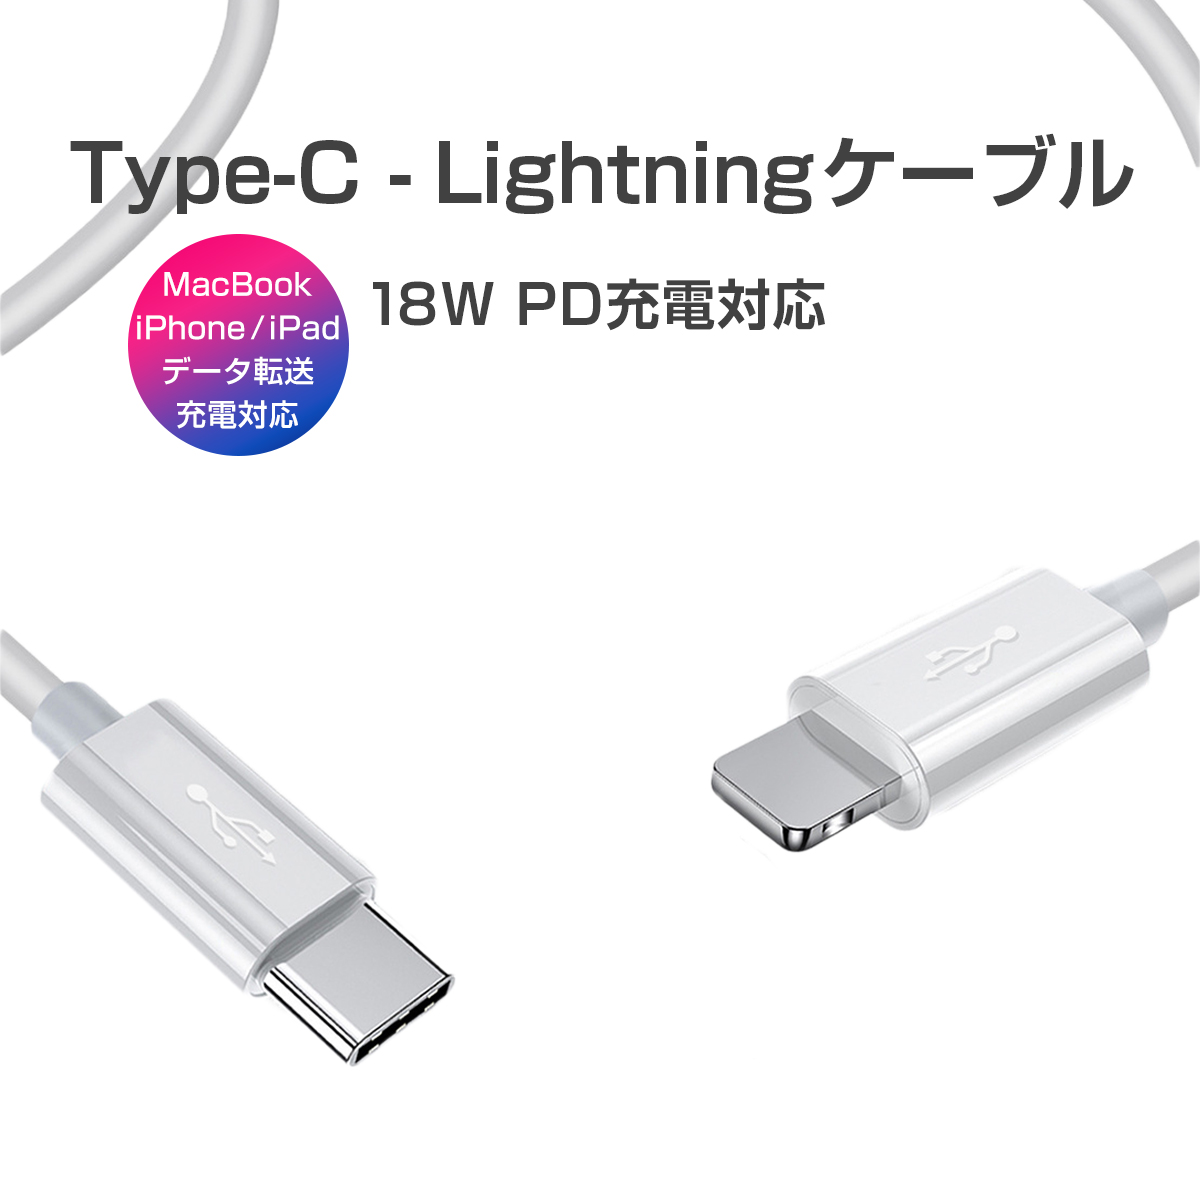 Type C Lightningケーブル PD充電 18W 急速充電 高速データ転送 通信 USB C ライトニング Power Deliverly 1m 白 iPhone 11/11 Pro/11 Pro Max/XR/XS Max/XS/X/8/8 Plus 対応 SDM便送料無料 1ヶ月保証